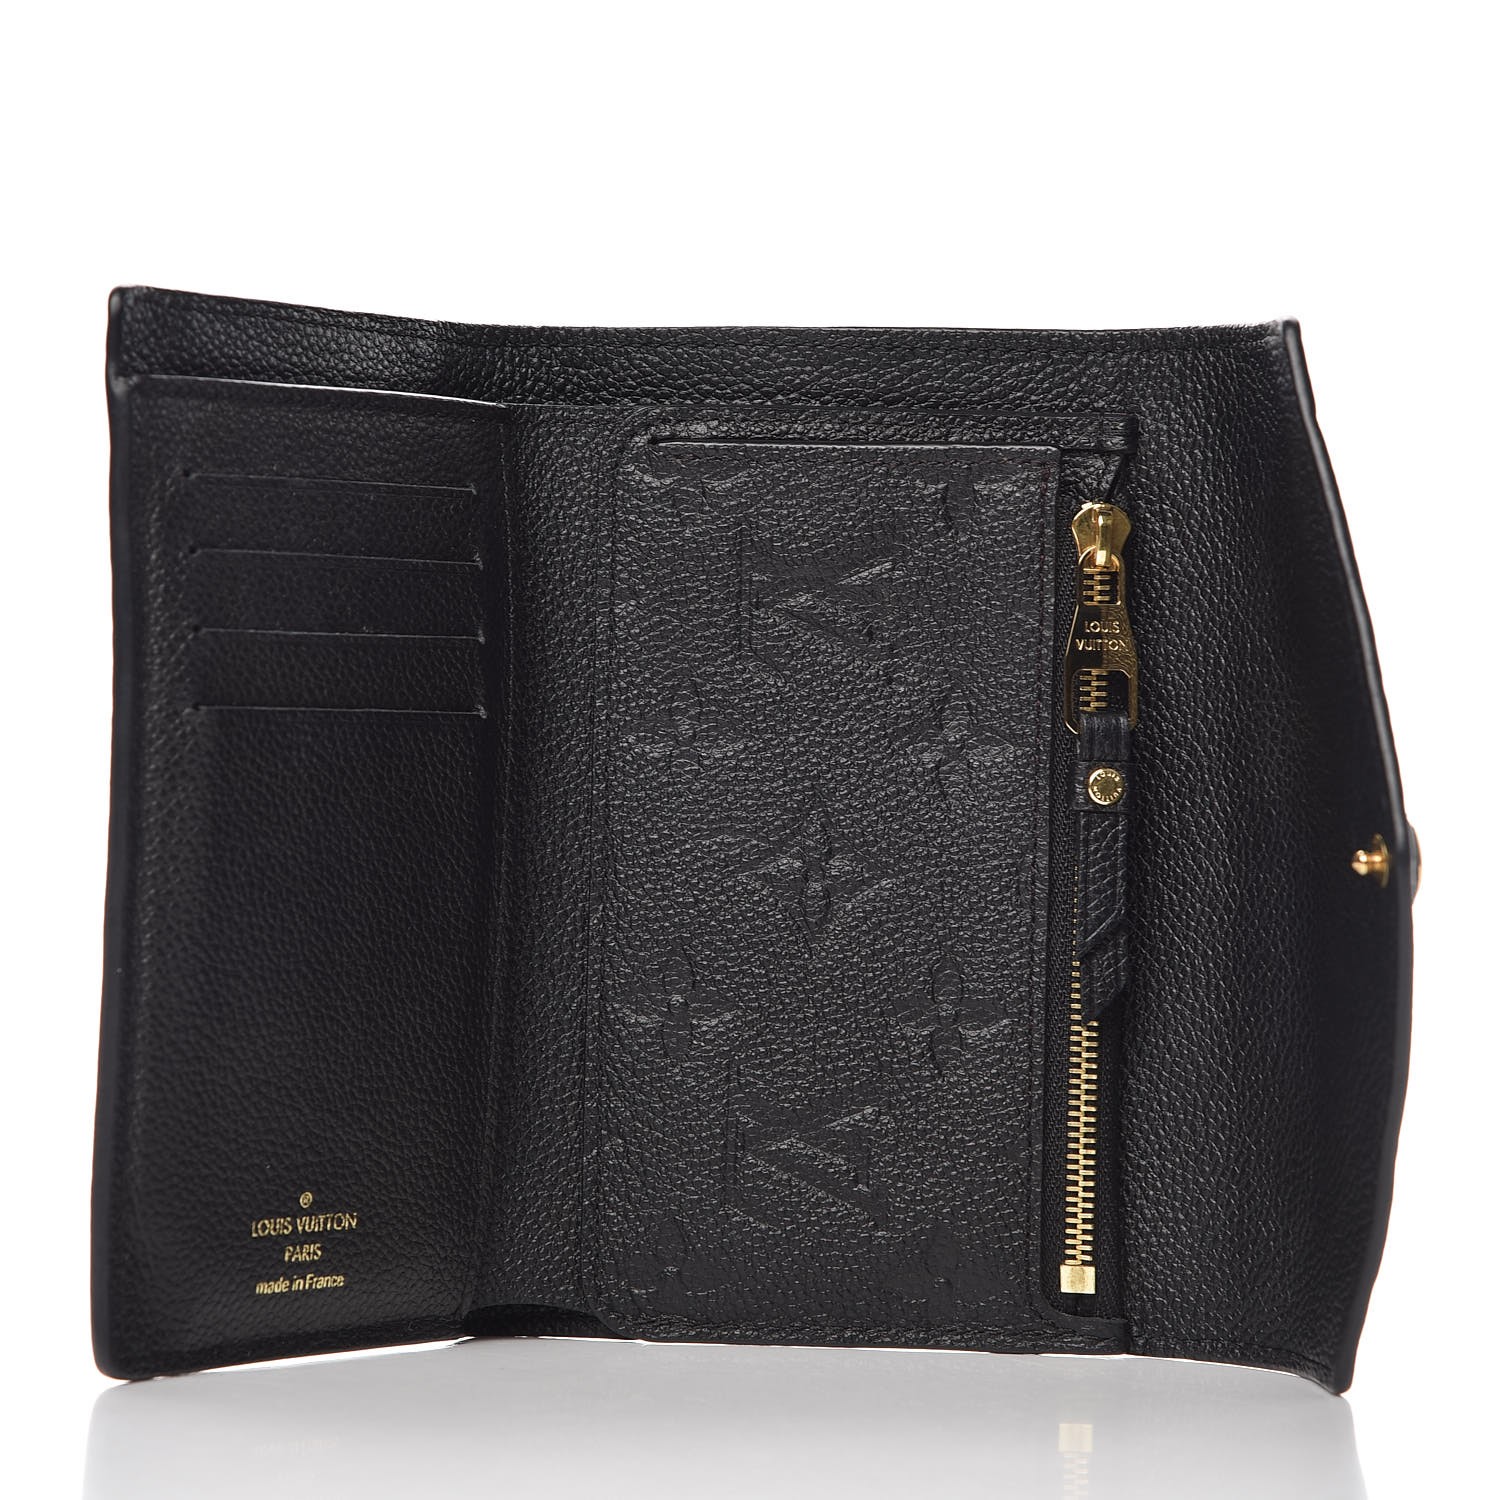 LOUIS VUITTON Empreinte Compact Curieuse Wallet Black 316227